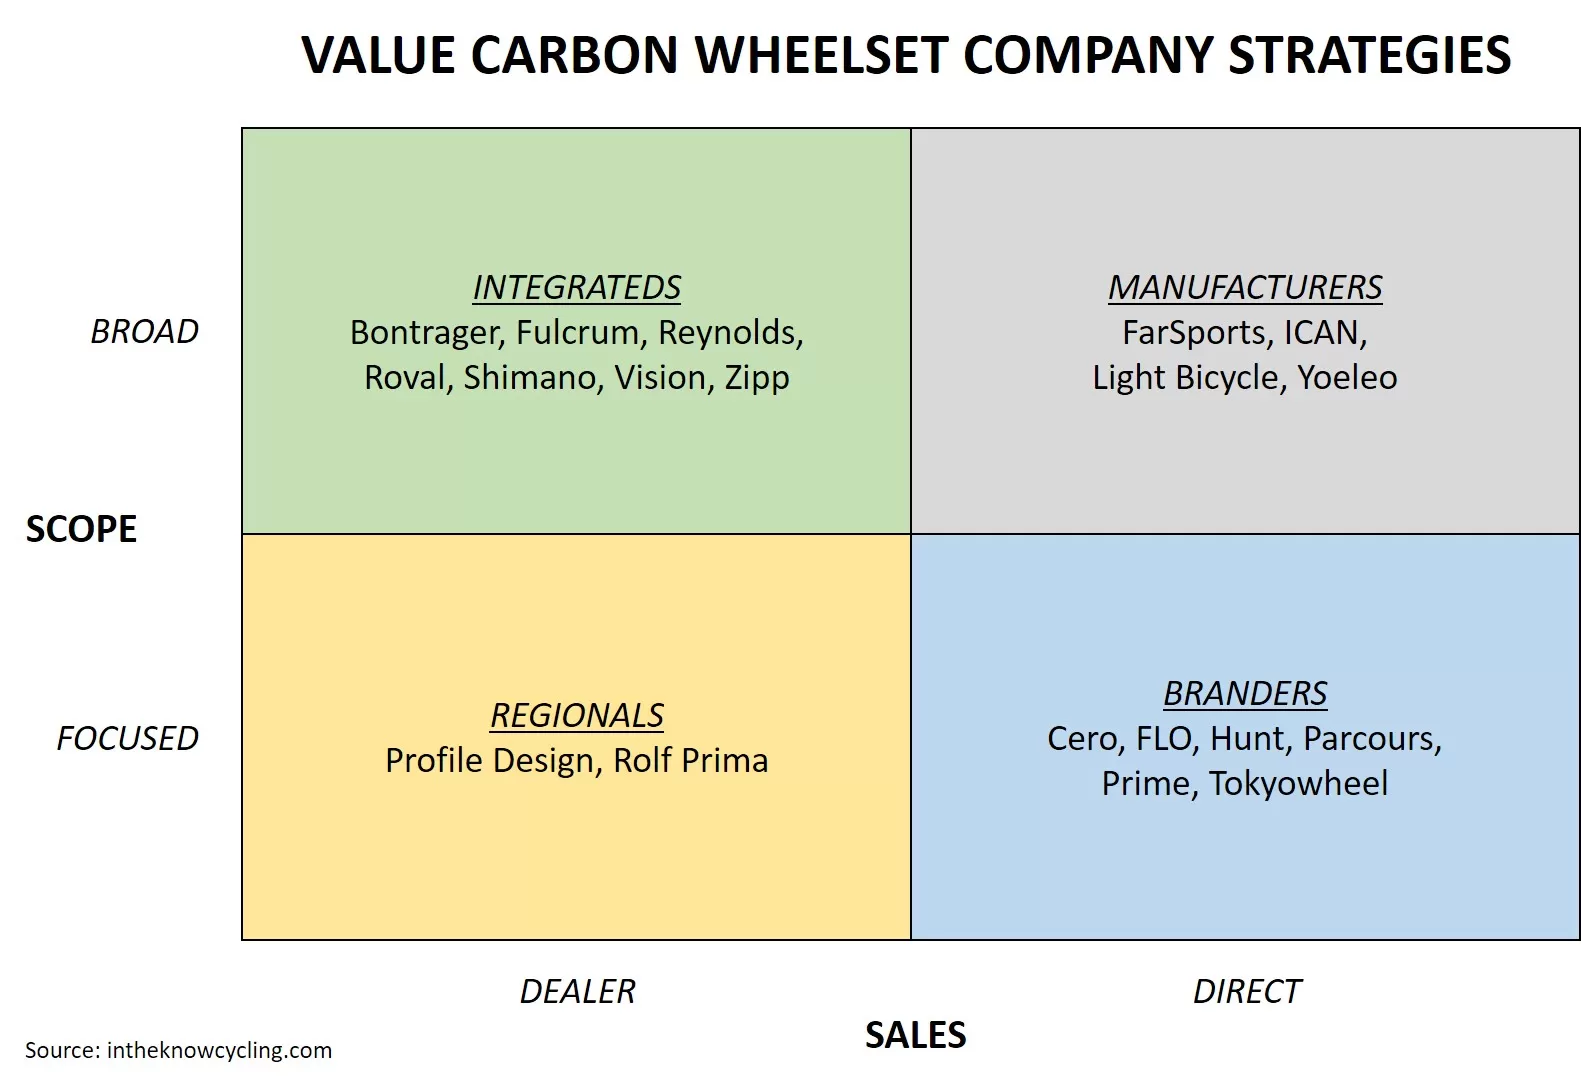 Value Carbon Wheelset Company Strategies